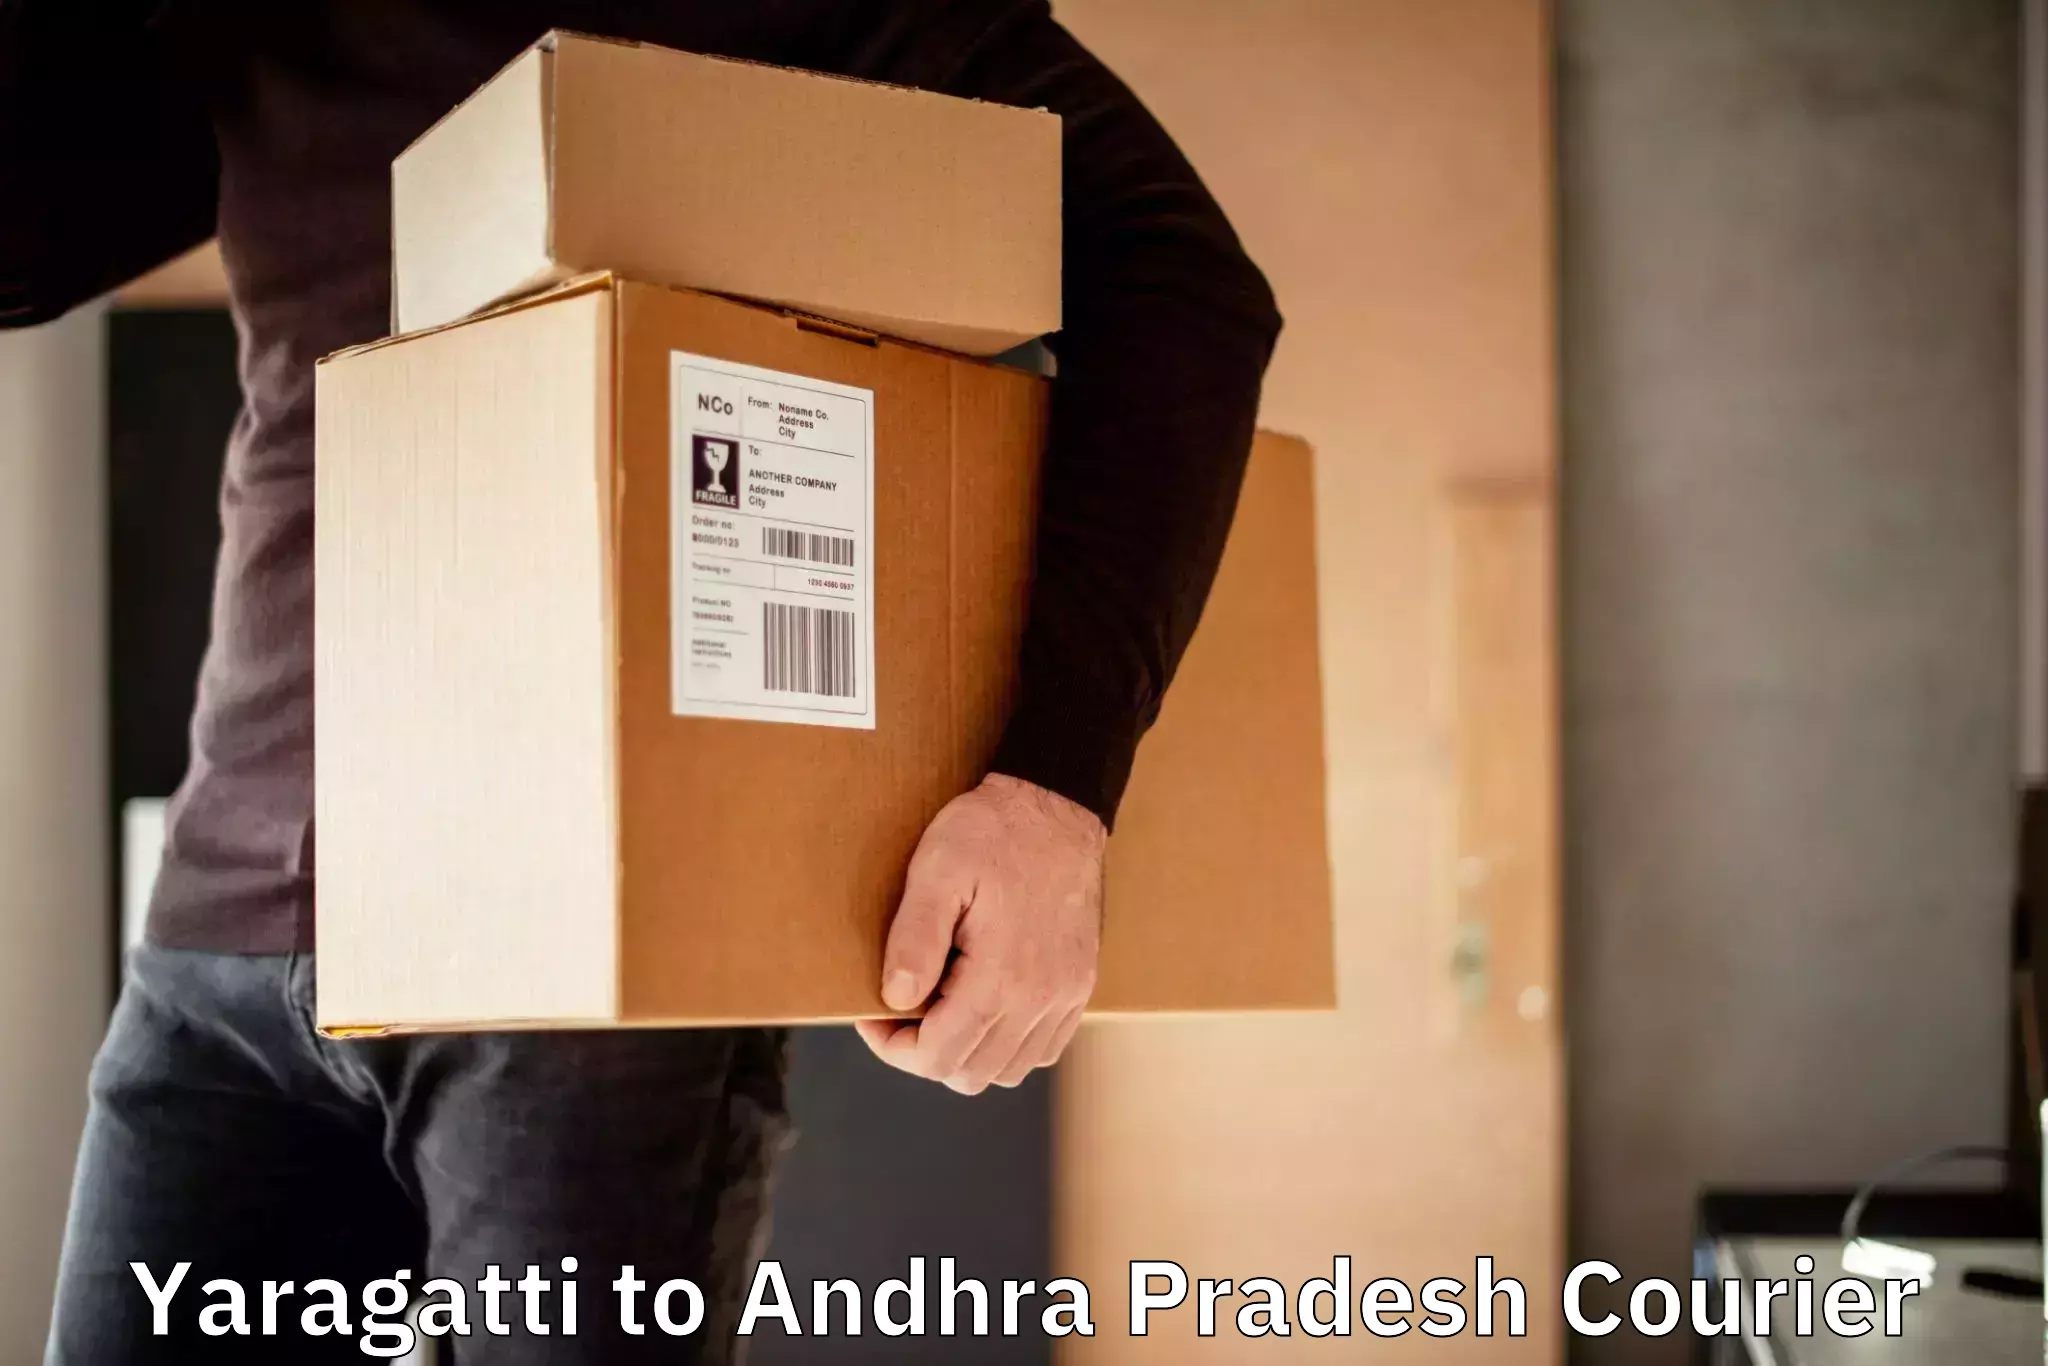 Express delivery network Yaragatti to Andhra Pradesh